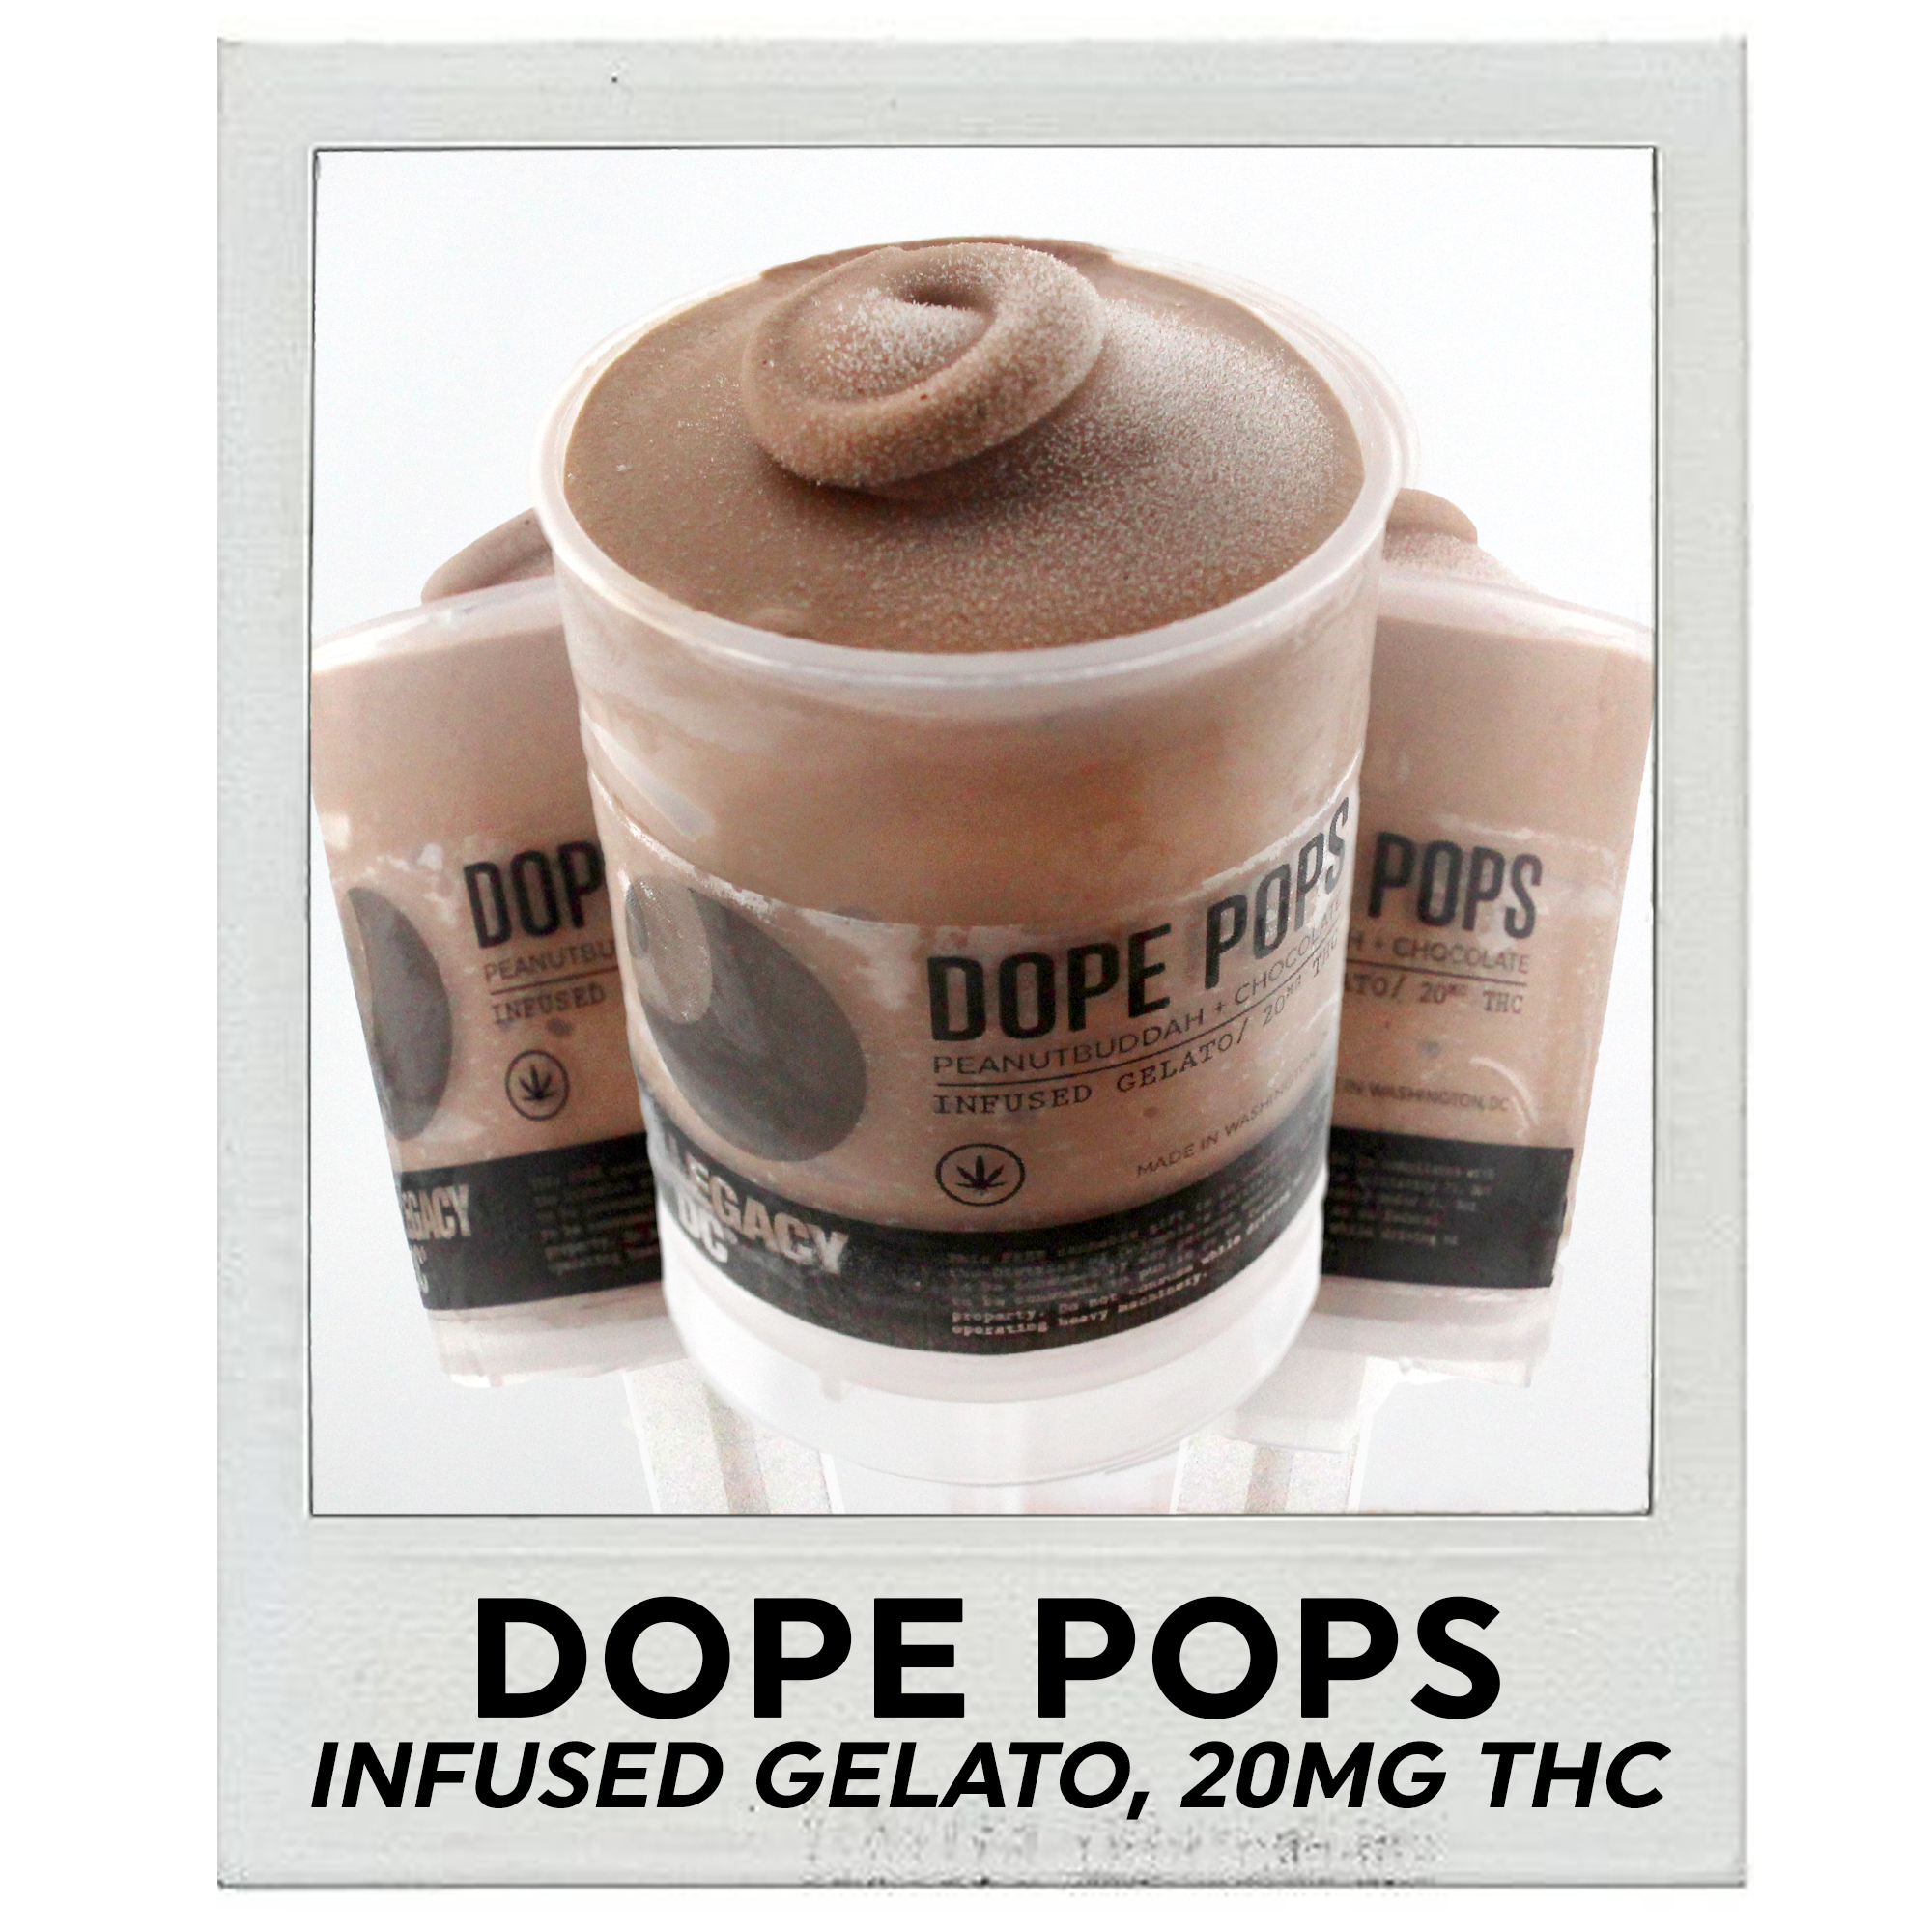 DOPE POPS - Peanut Buddah Chocolate - Infused Gelato - 20mg